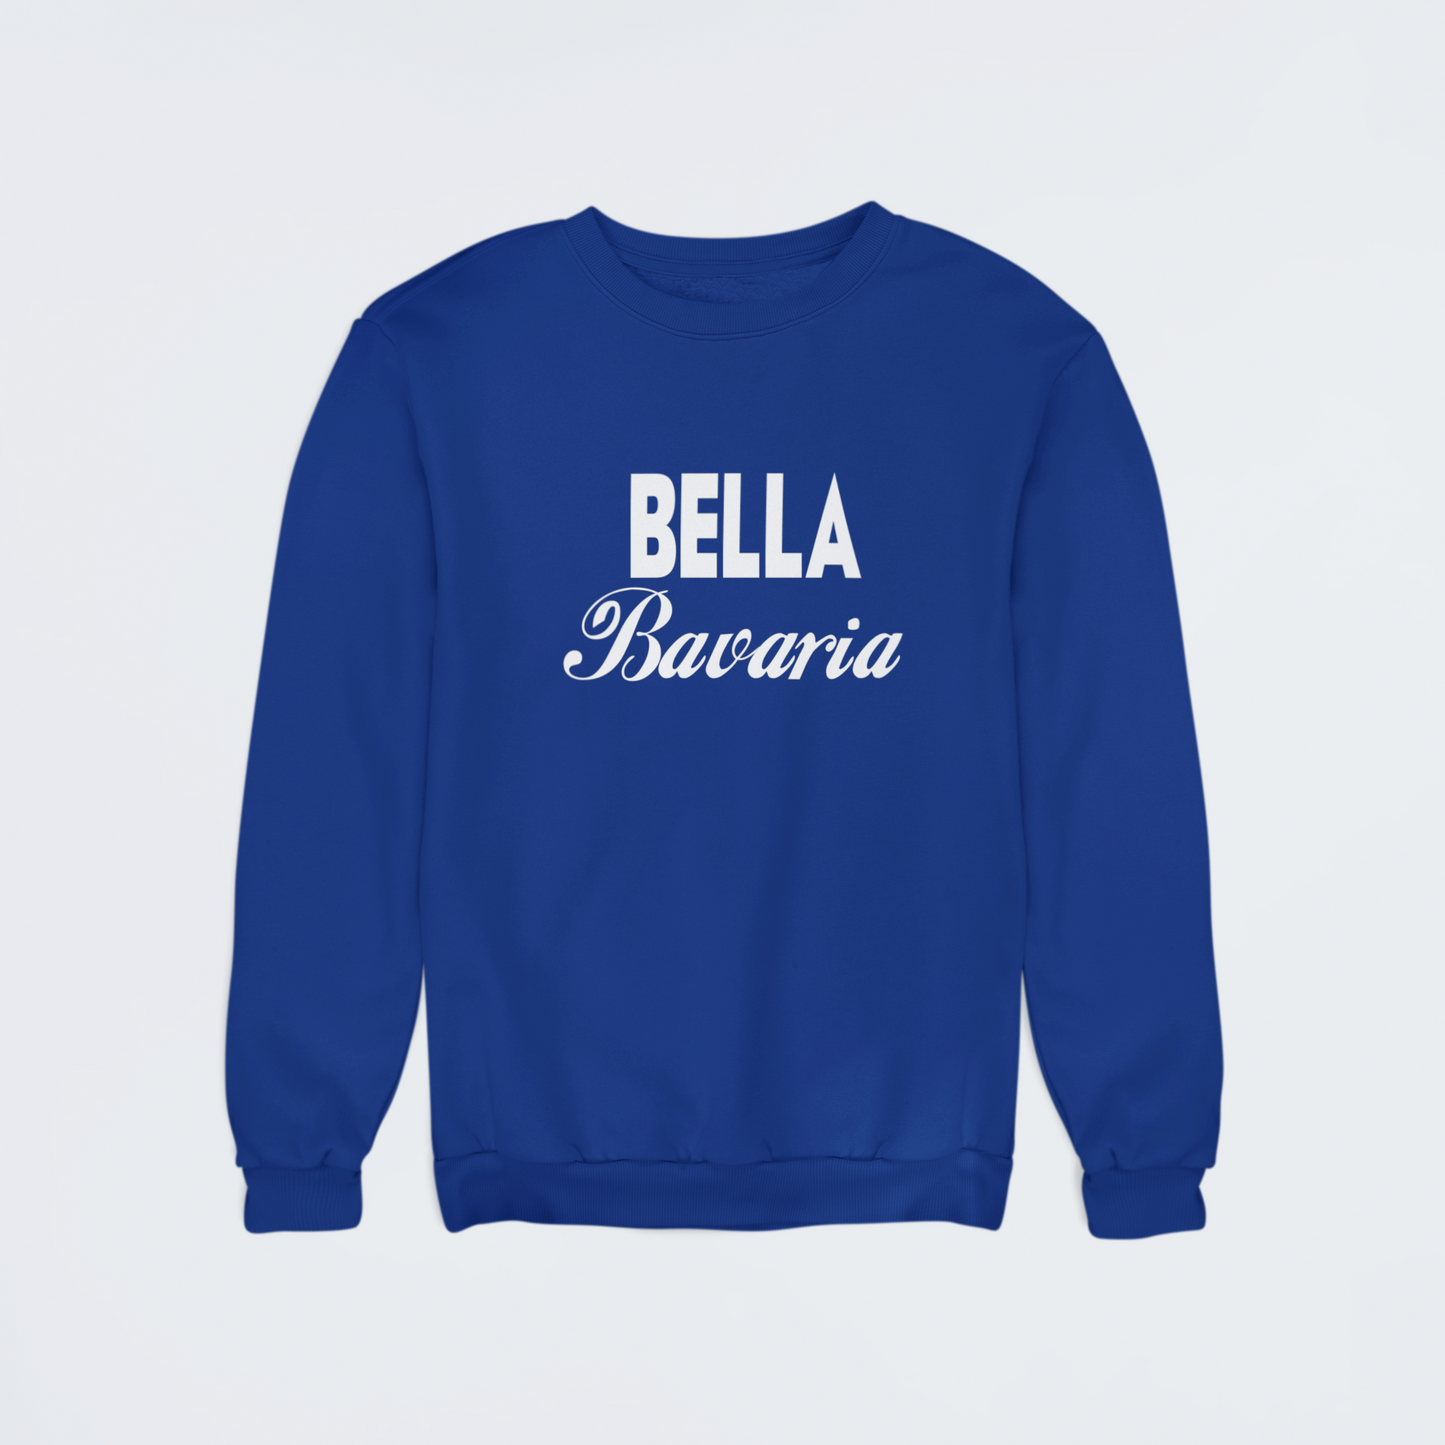 Bella Bavaria Blue Sweater